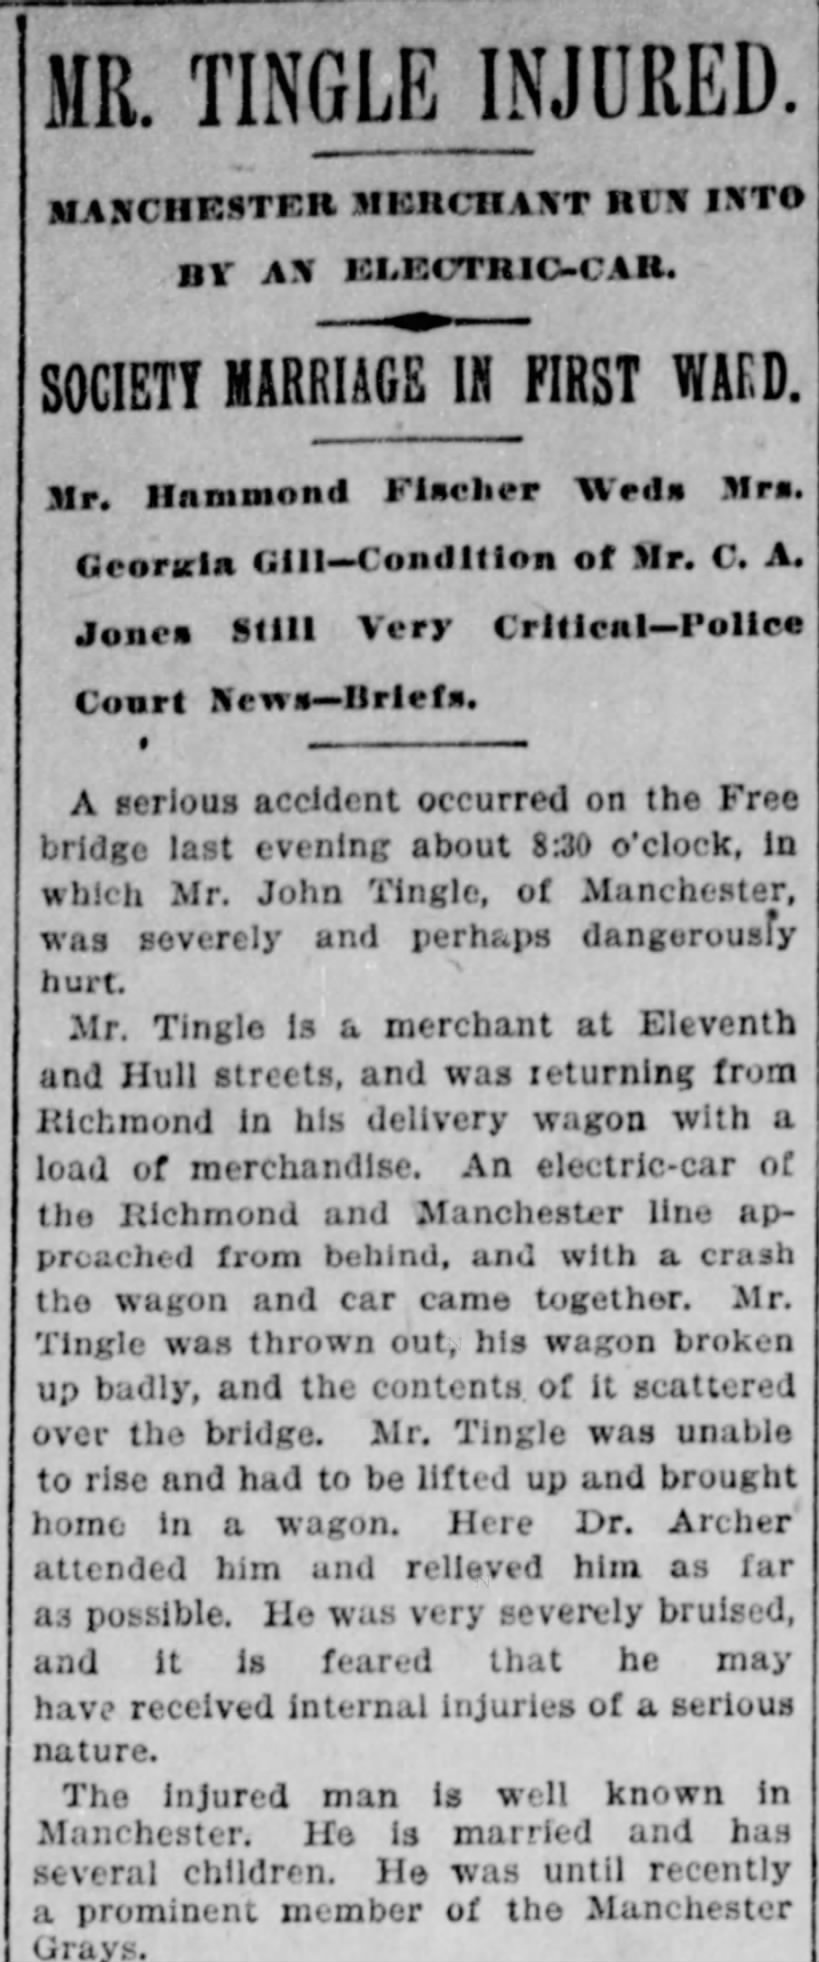 The Richmond Dispatch
Wednesday Sept 21, 1898